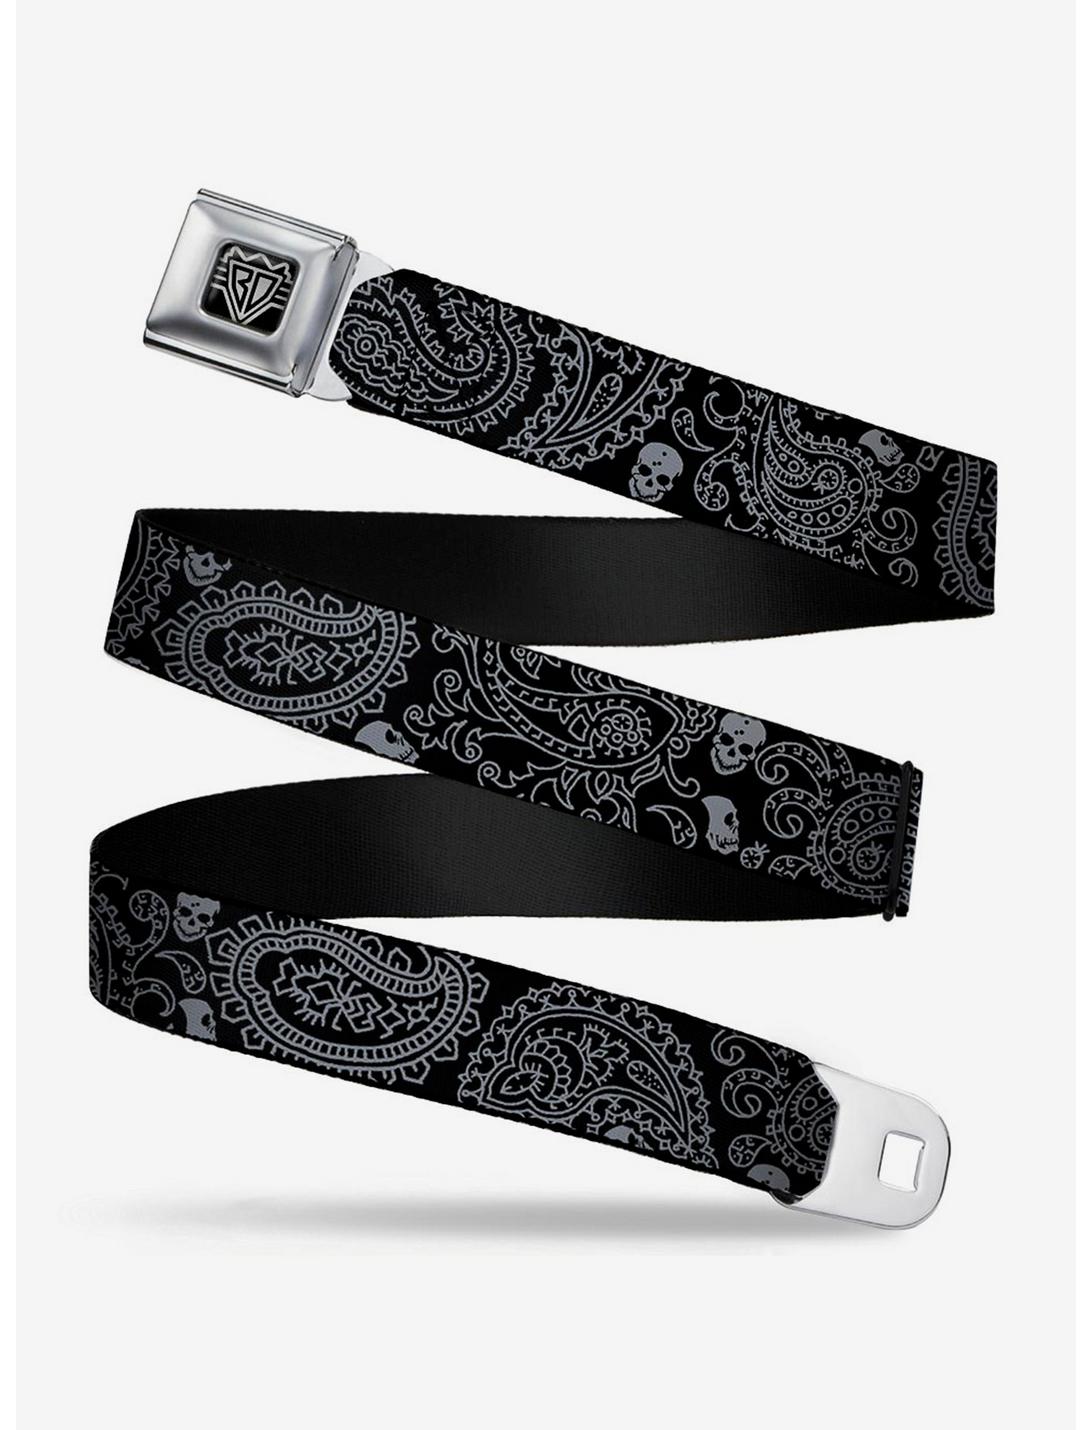 Bandana Skull Print Seatbelt Belt Black Silver, SILVER, hi-res